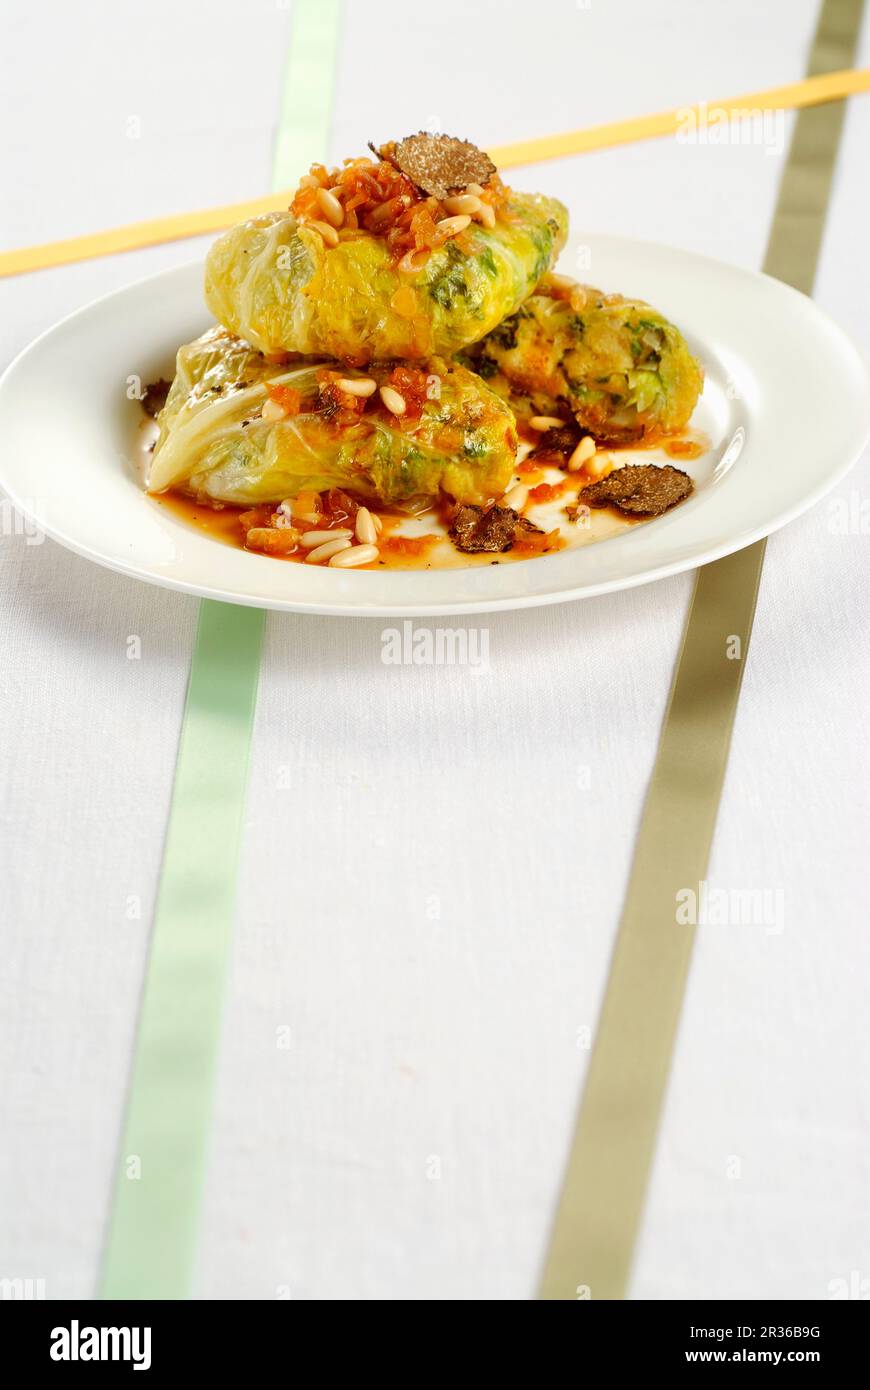 Fagottino di verza al tartufo (Savoy cabbage roulade with truffles, Italy) Stock Photo